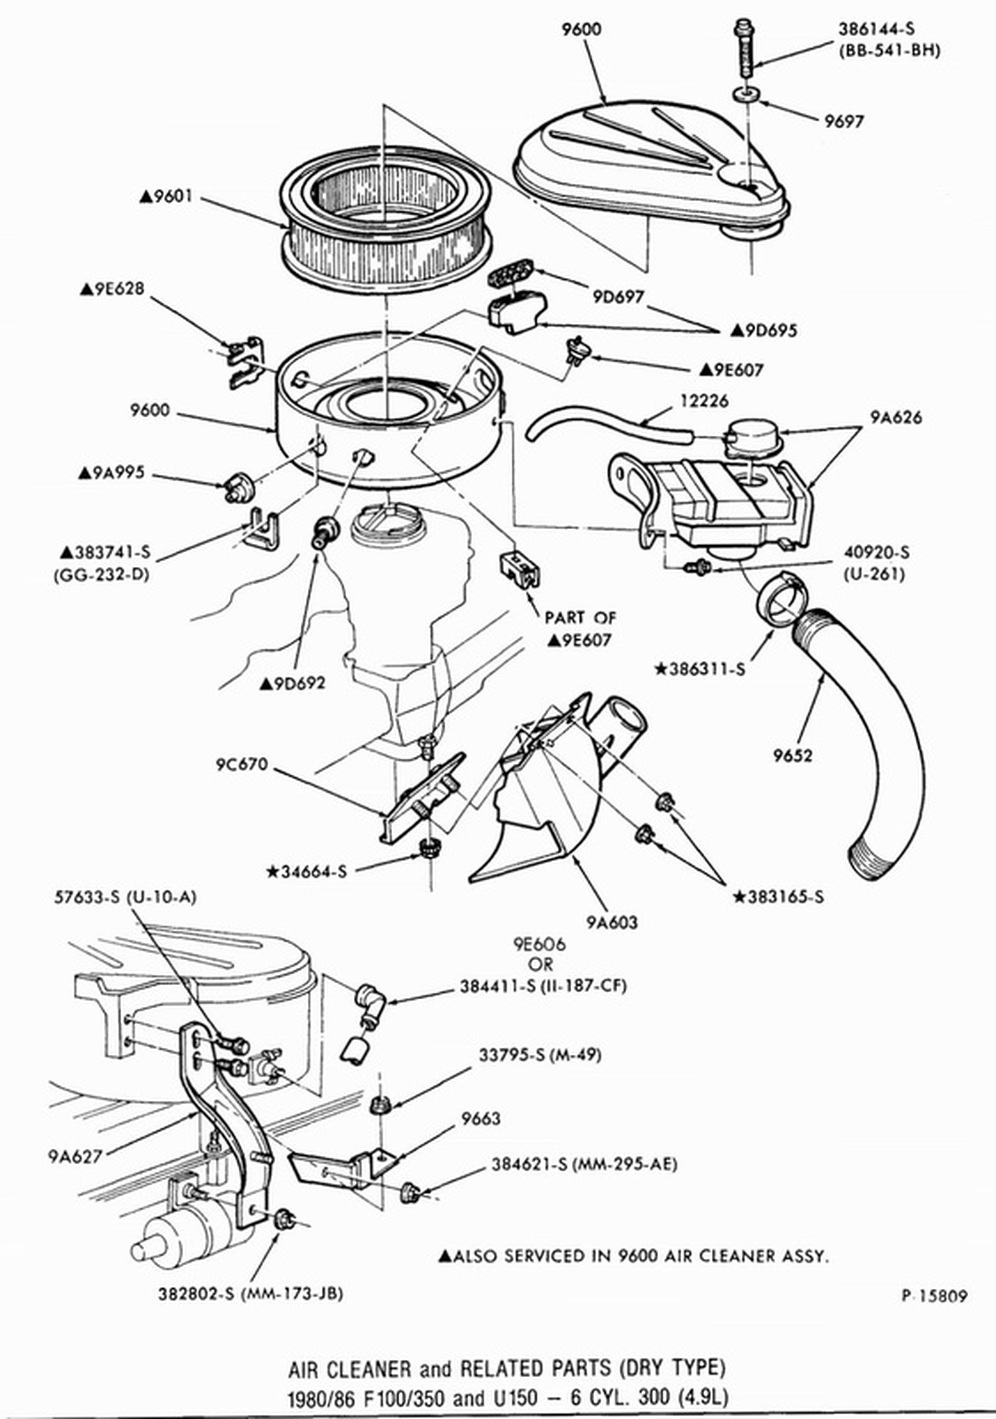 [DIAGRAM] 1979 Ford F100 460 Engine Diagram FULL Version HD Quality